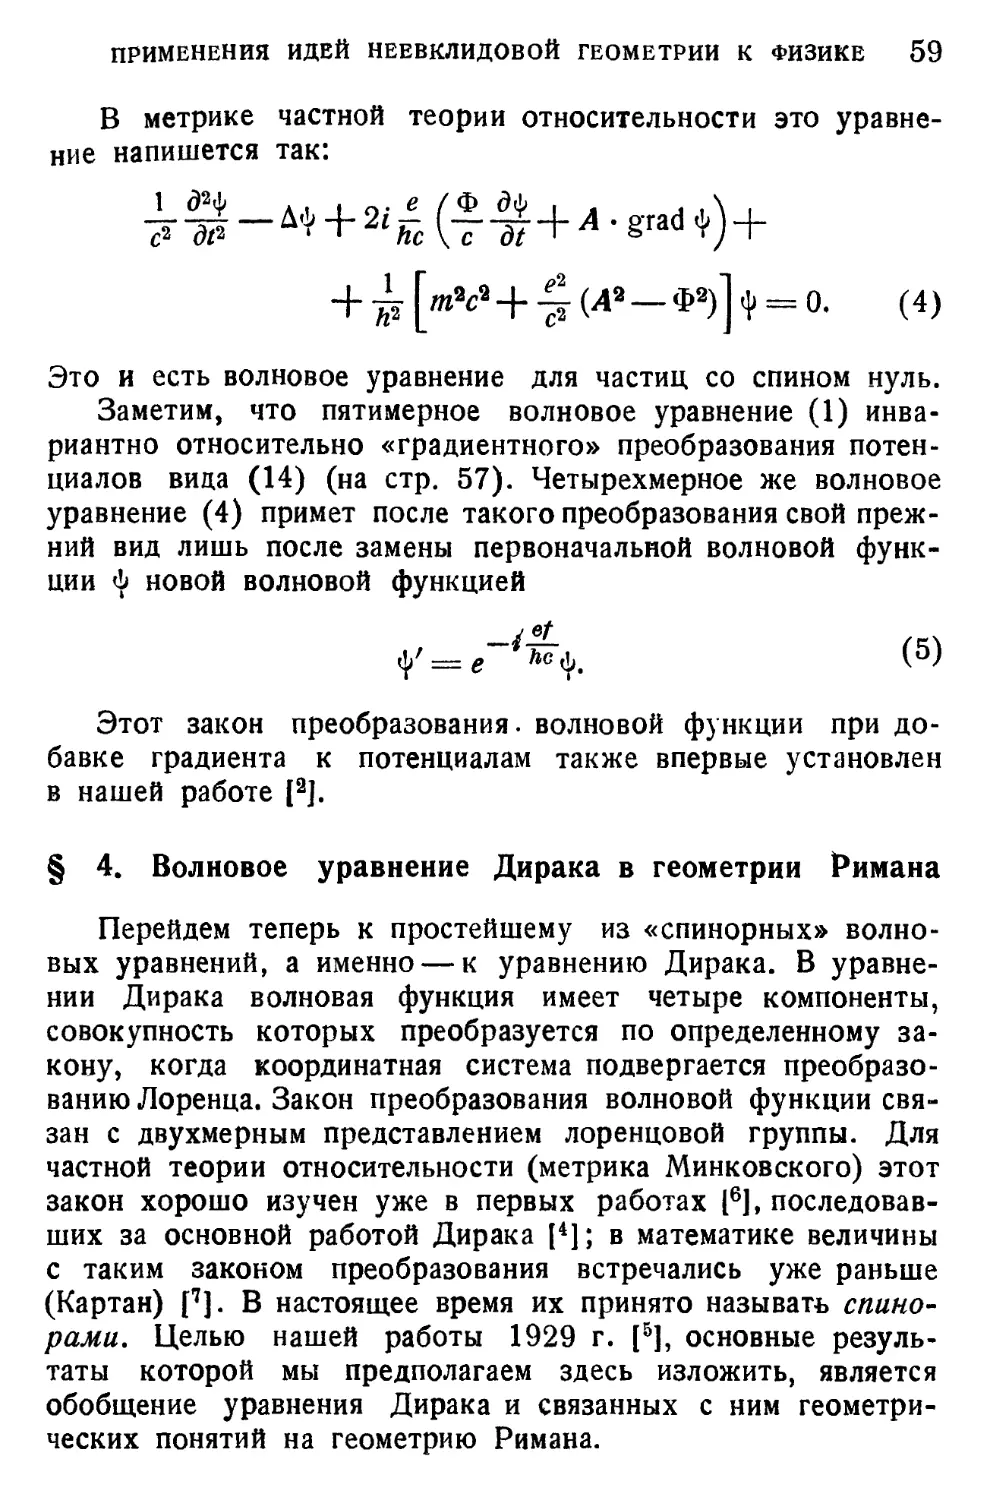 § 4. Волновое уравнение Дирака в геометрии Римана